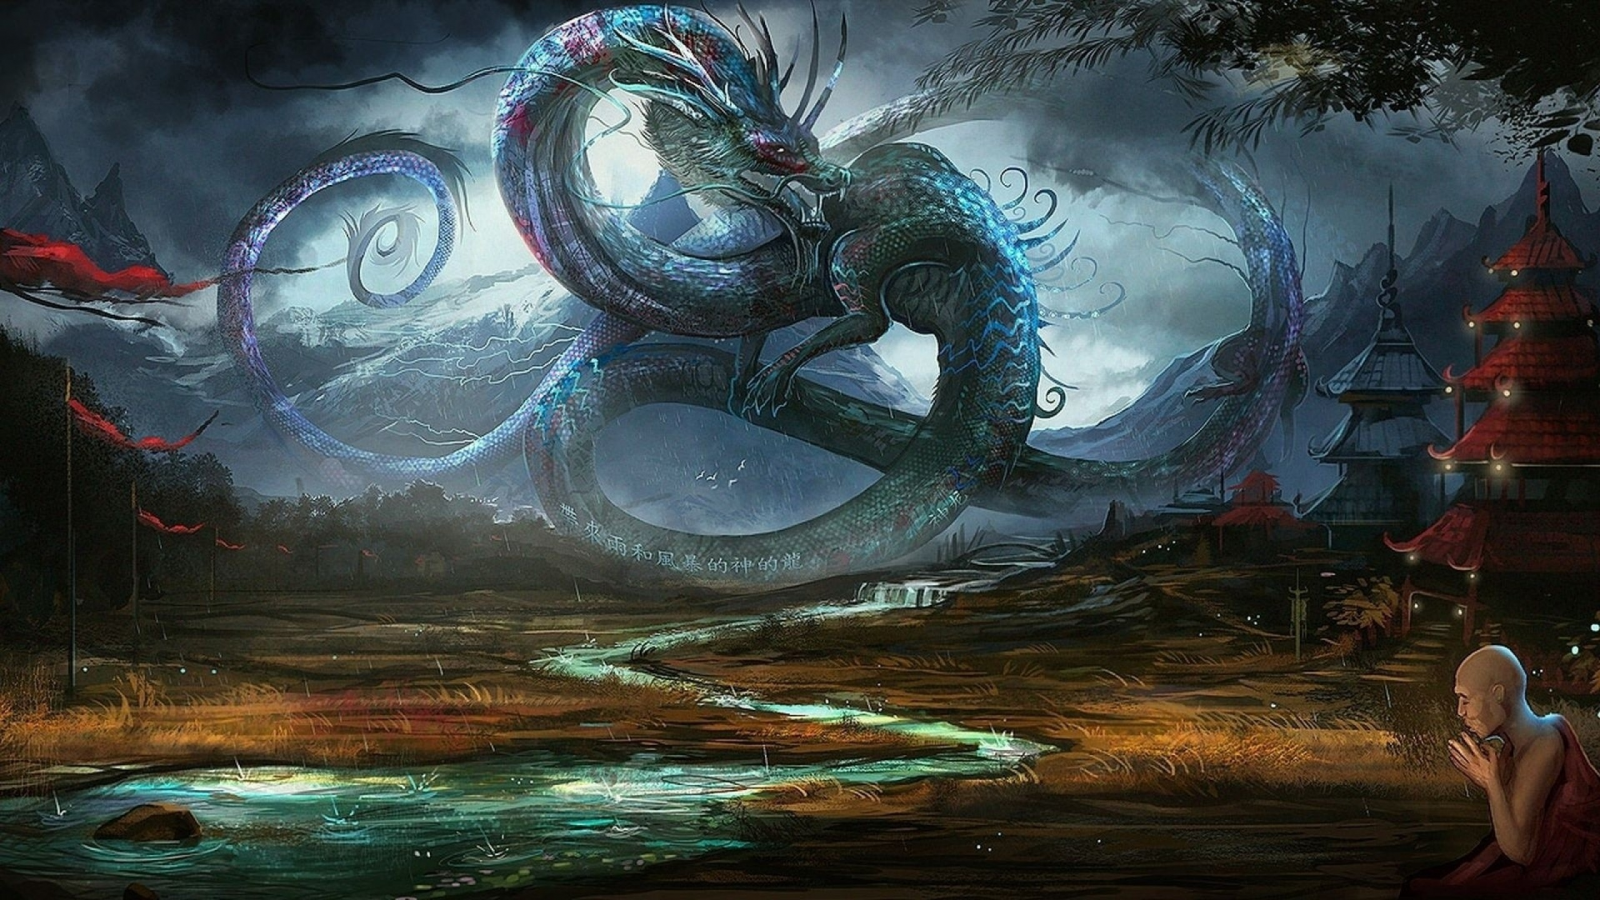 shaolin, skies, dragons, water, fantasy art, sea, rain, flags, artwork, legendary, low resolution, , China